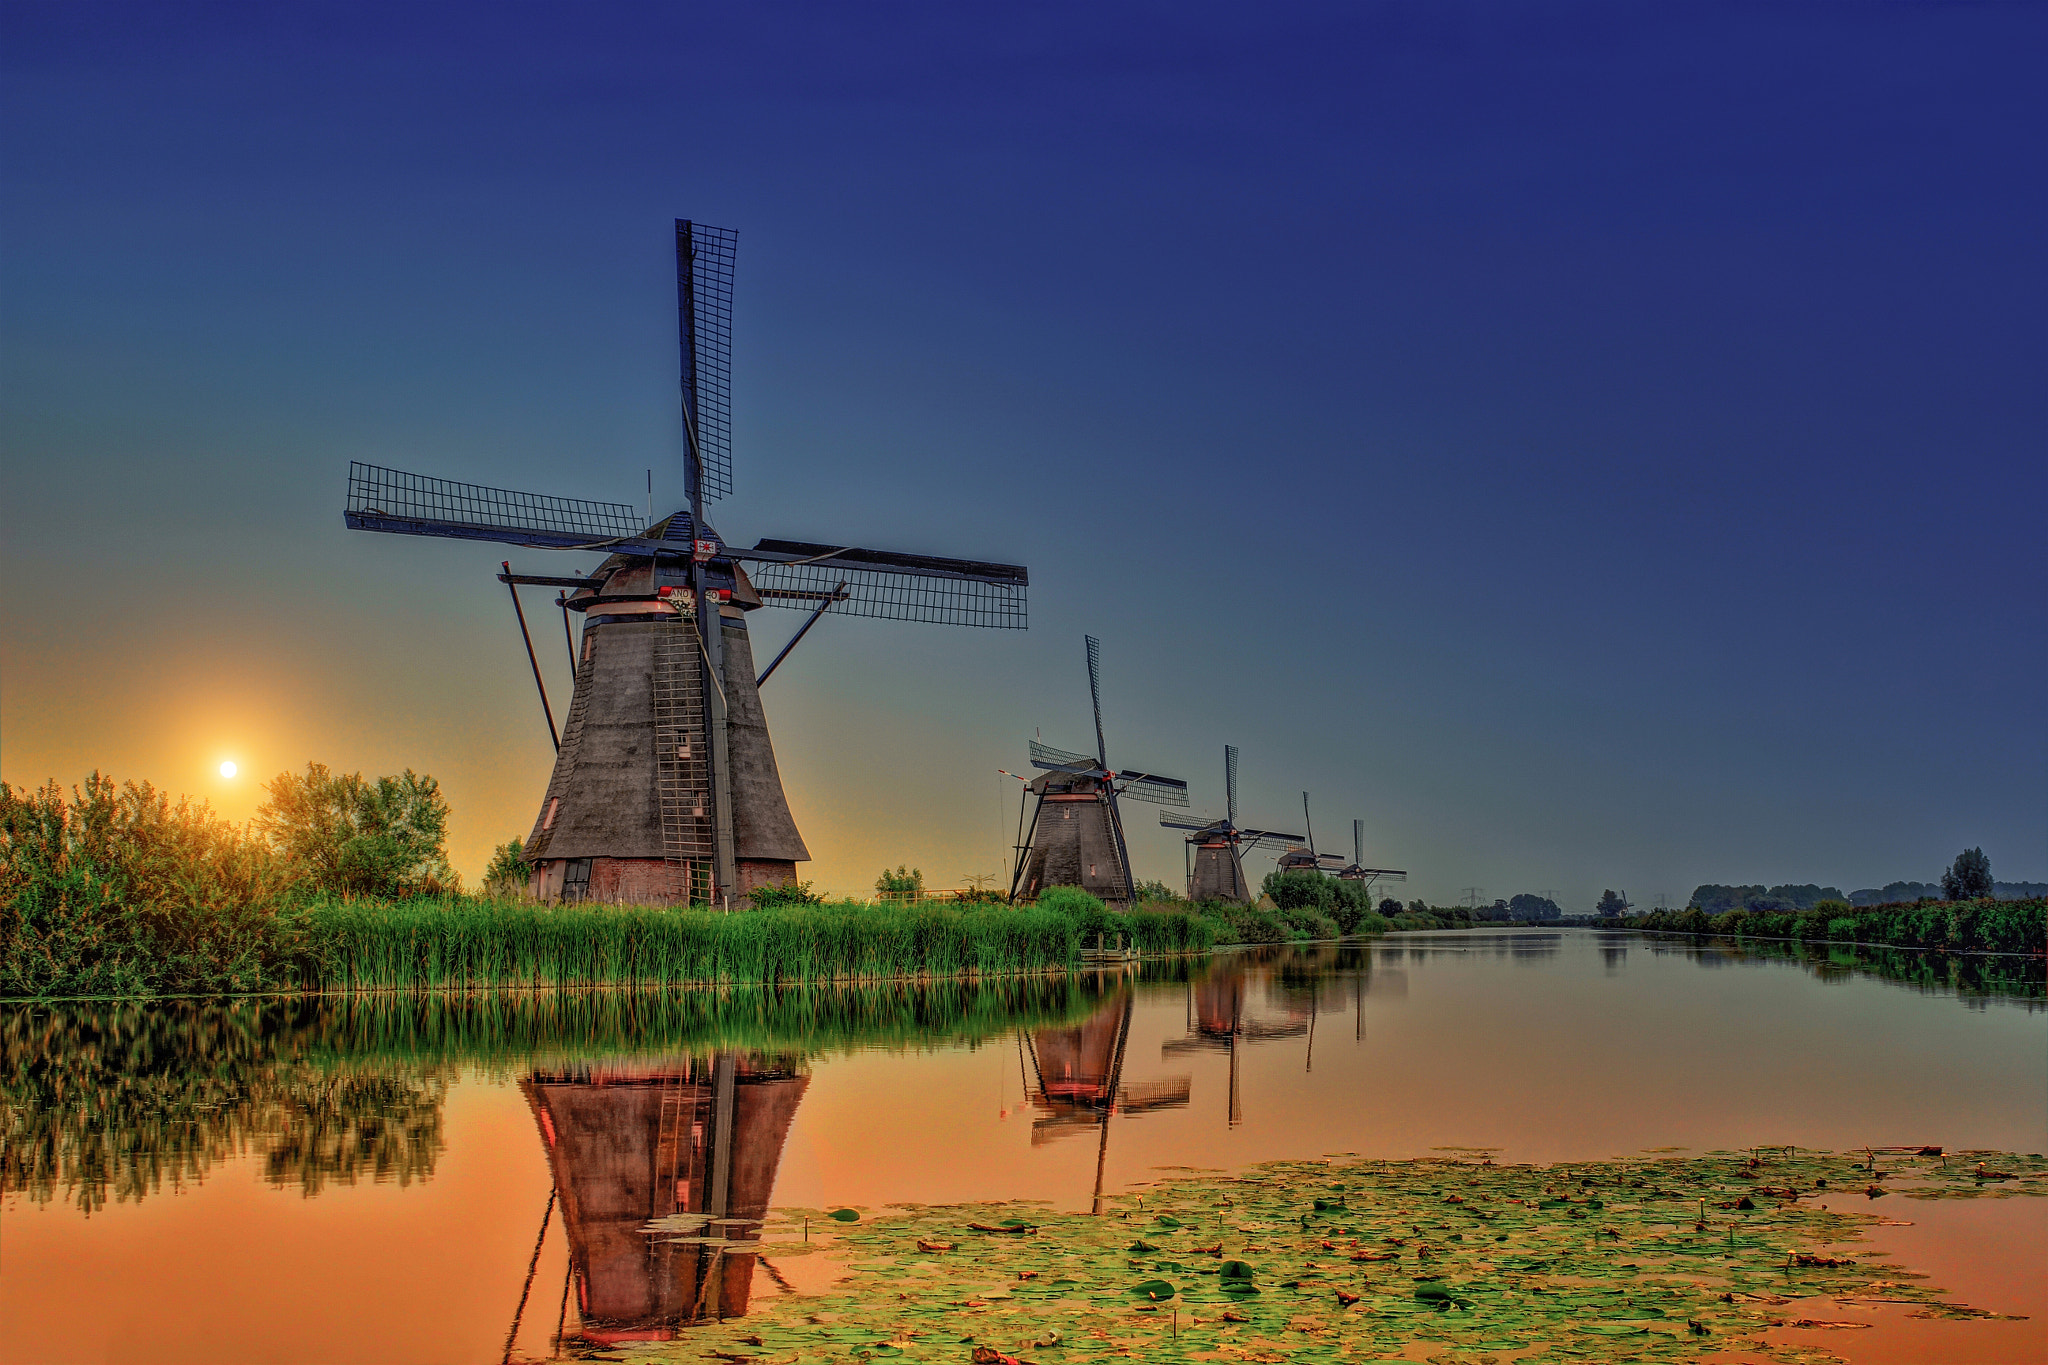 Wallpapers Kinderdijk Netherlands sunset on the desktop